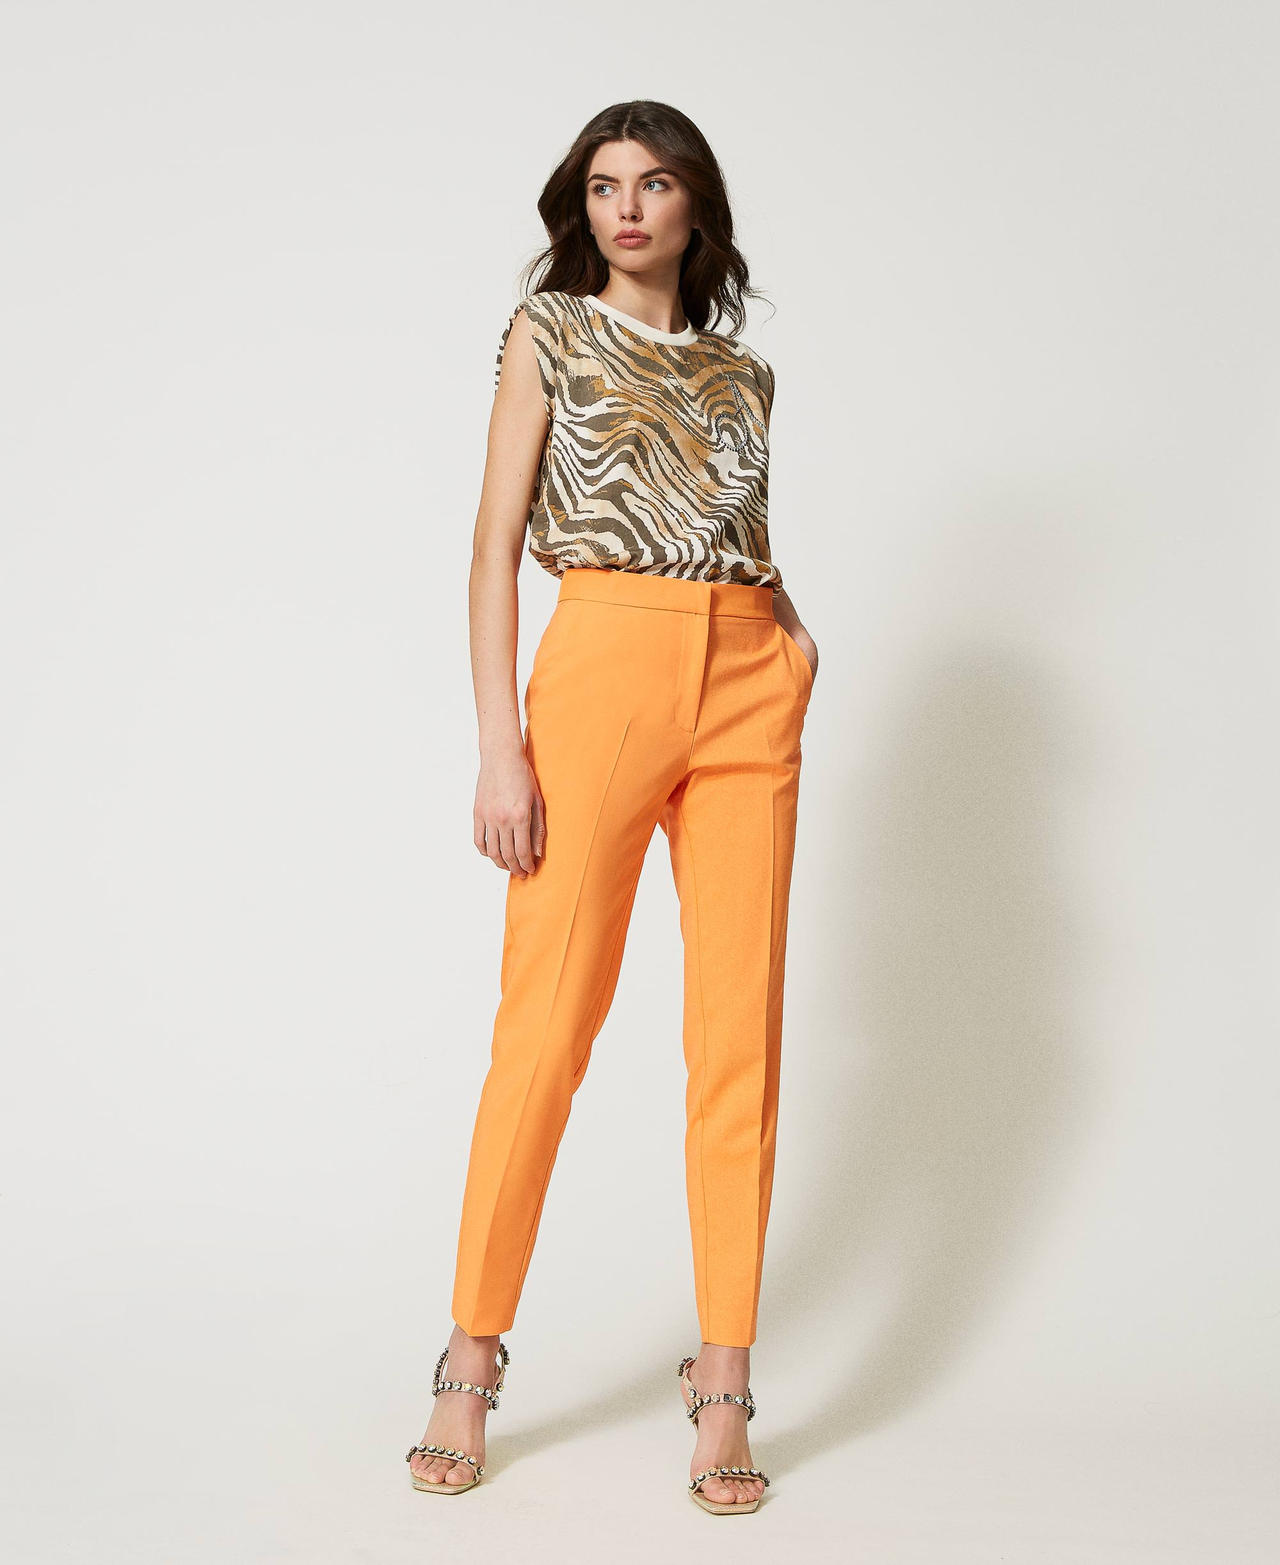 Pantalon cigarette en tissu technique Orange « Orange Tiger » Femme 231AP2166-02